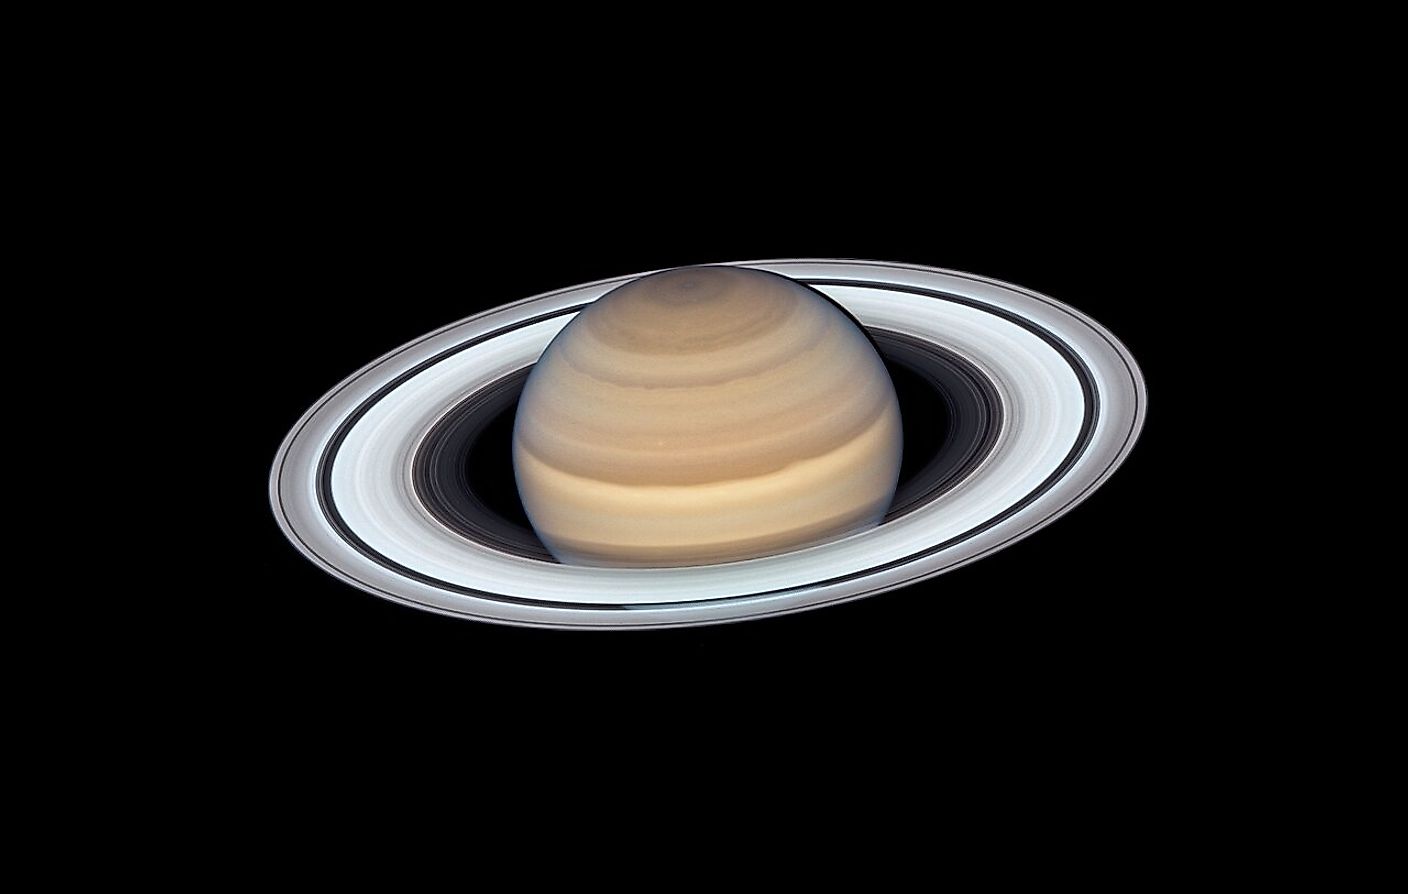 Hubble image of Saturn. Image credit: NASA/ESA